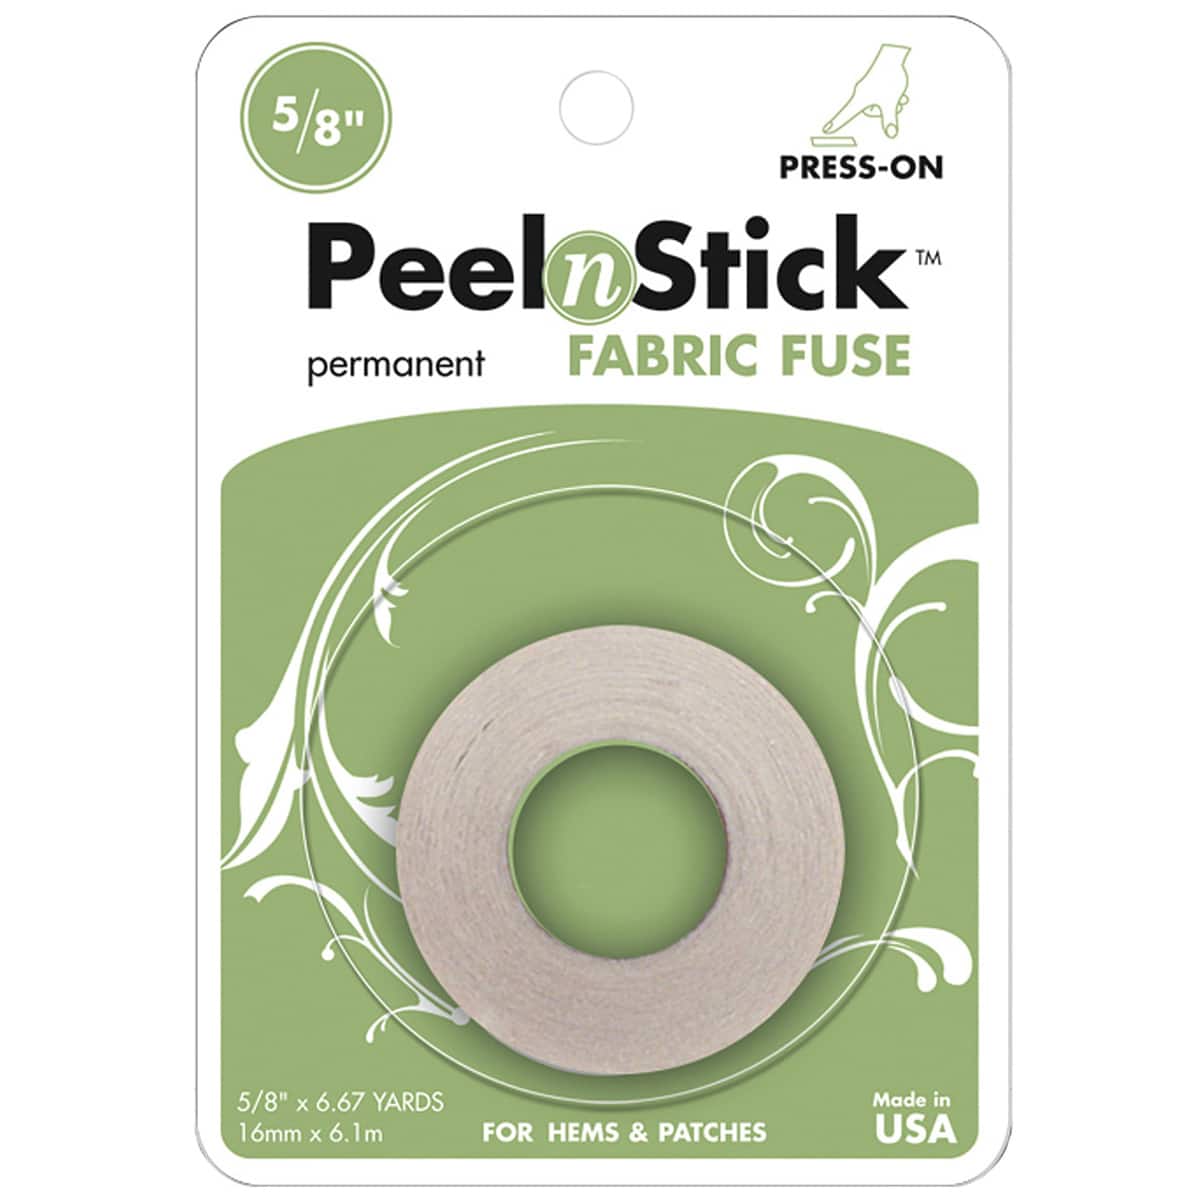 HeatnBond Fabric Fuse PeelnStick Fabric Adhesive Tape, 5/8 in x 20 ft –